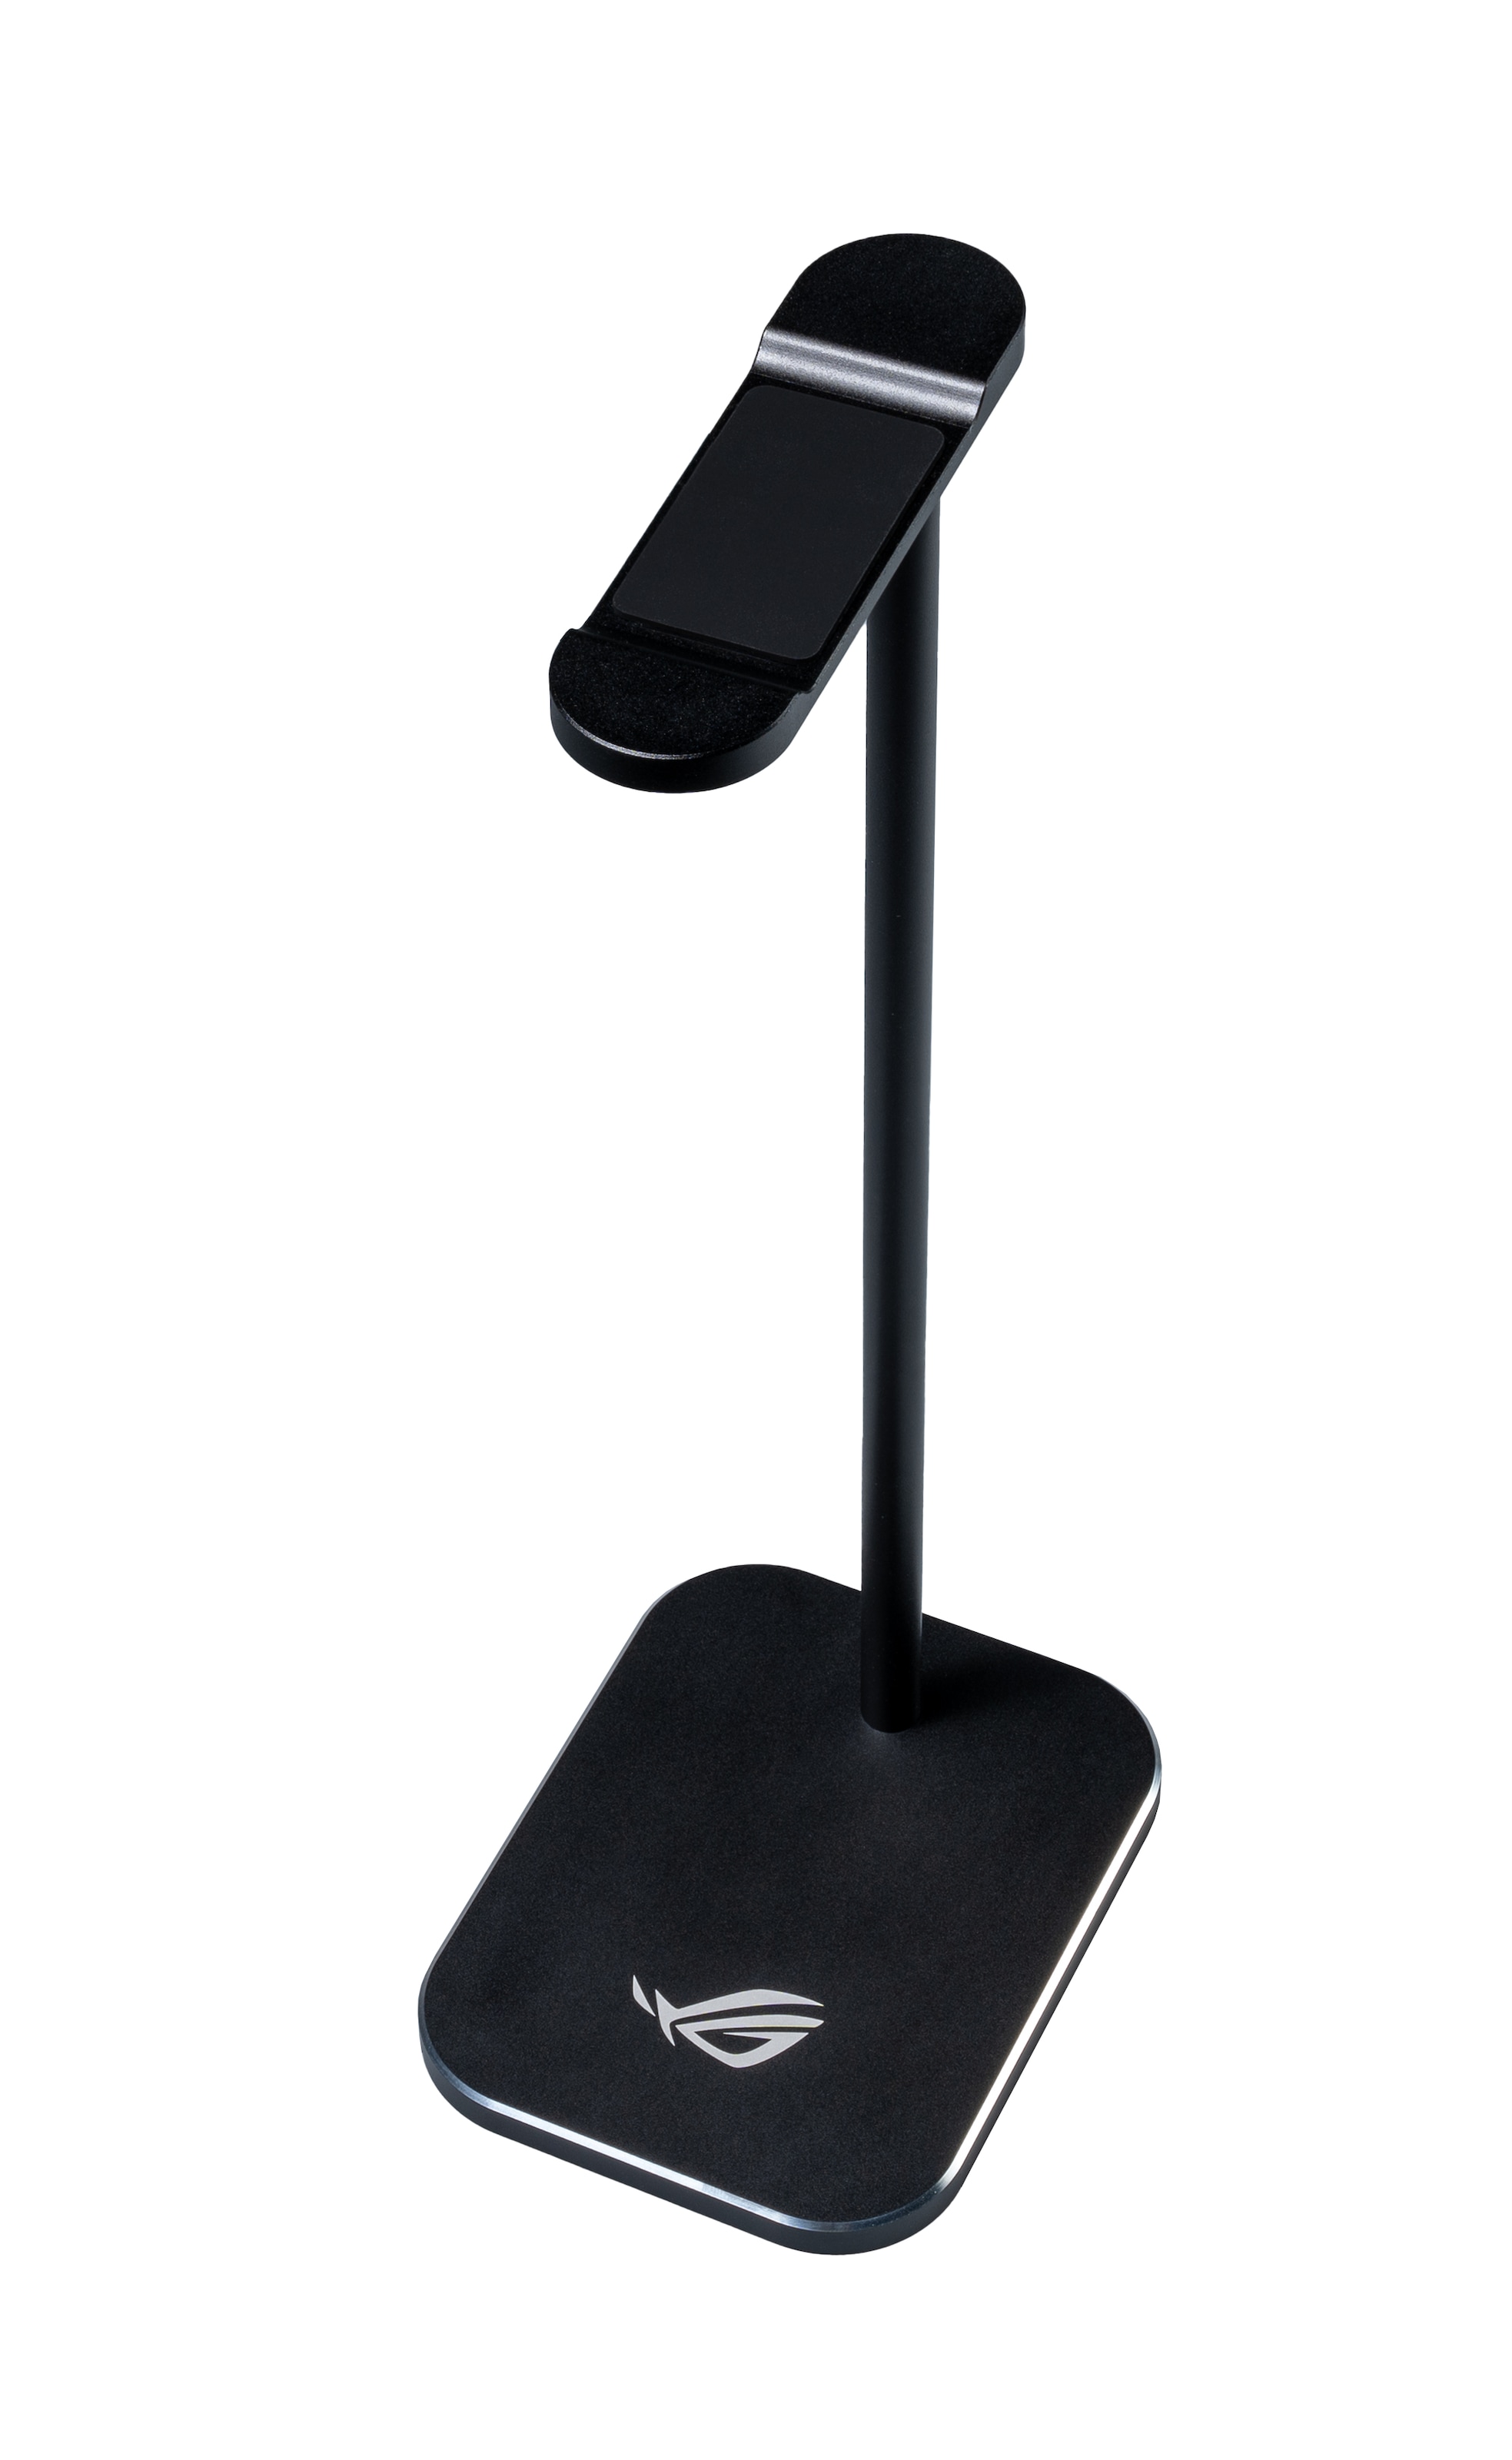 Asus Headset-Halterung »ROG Metal Stand«